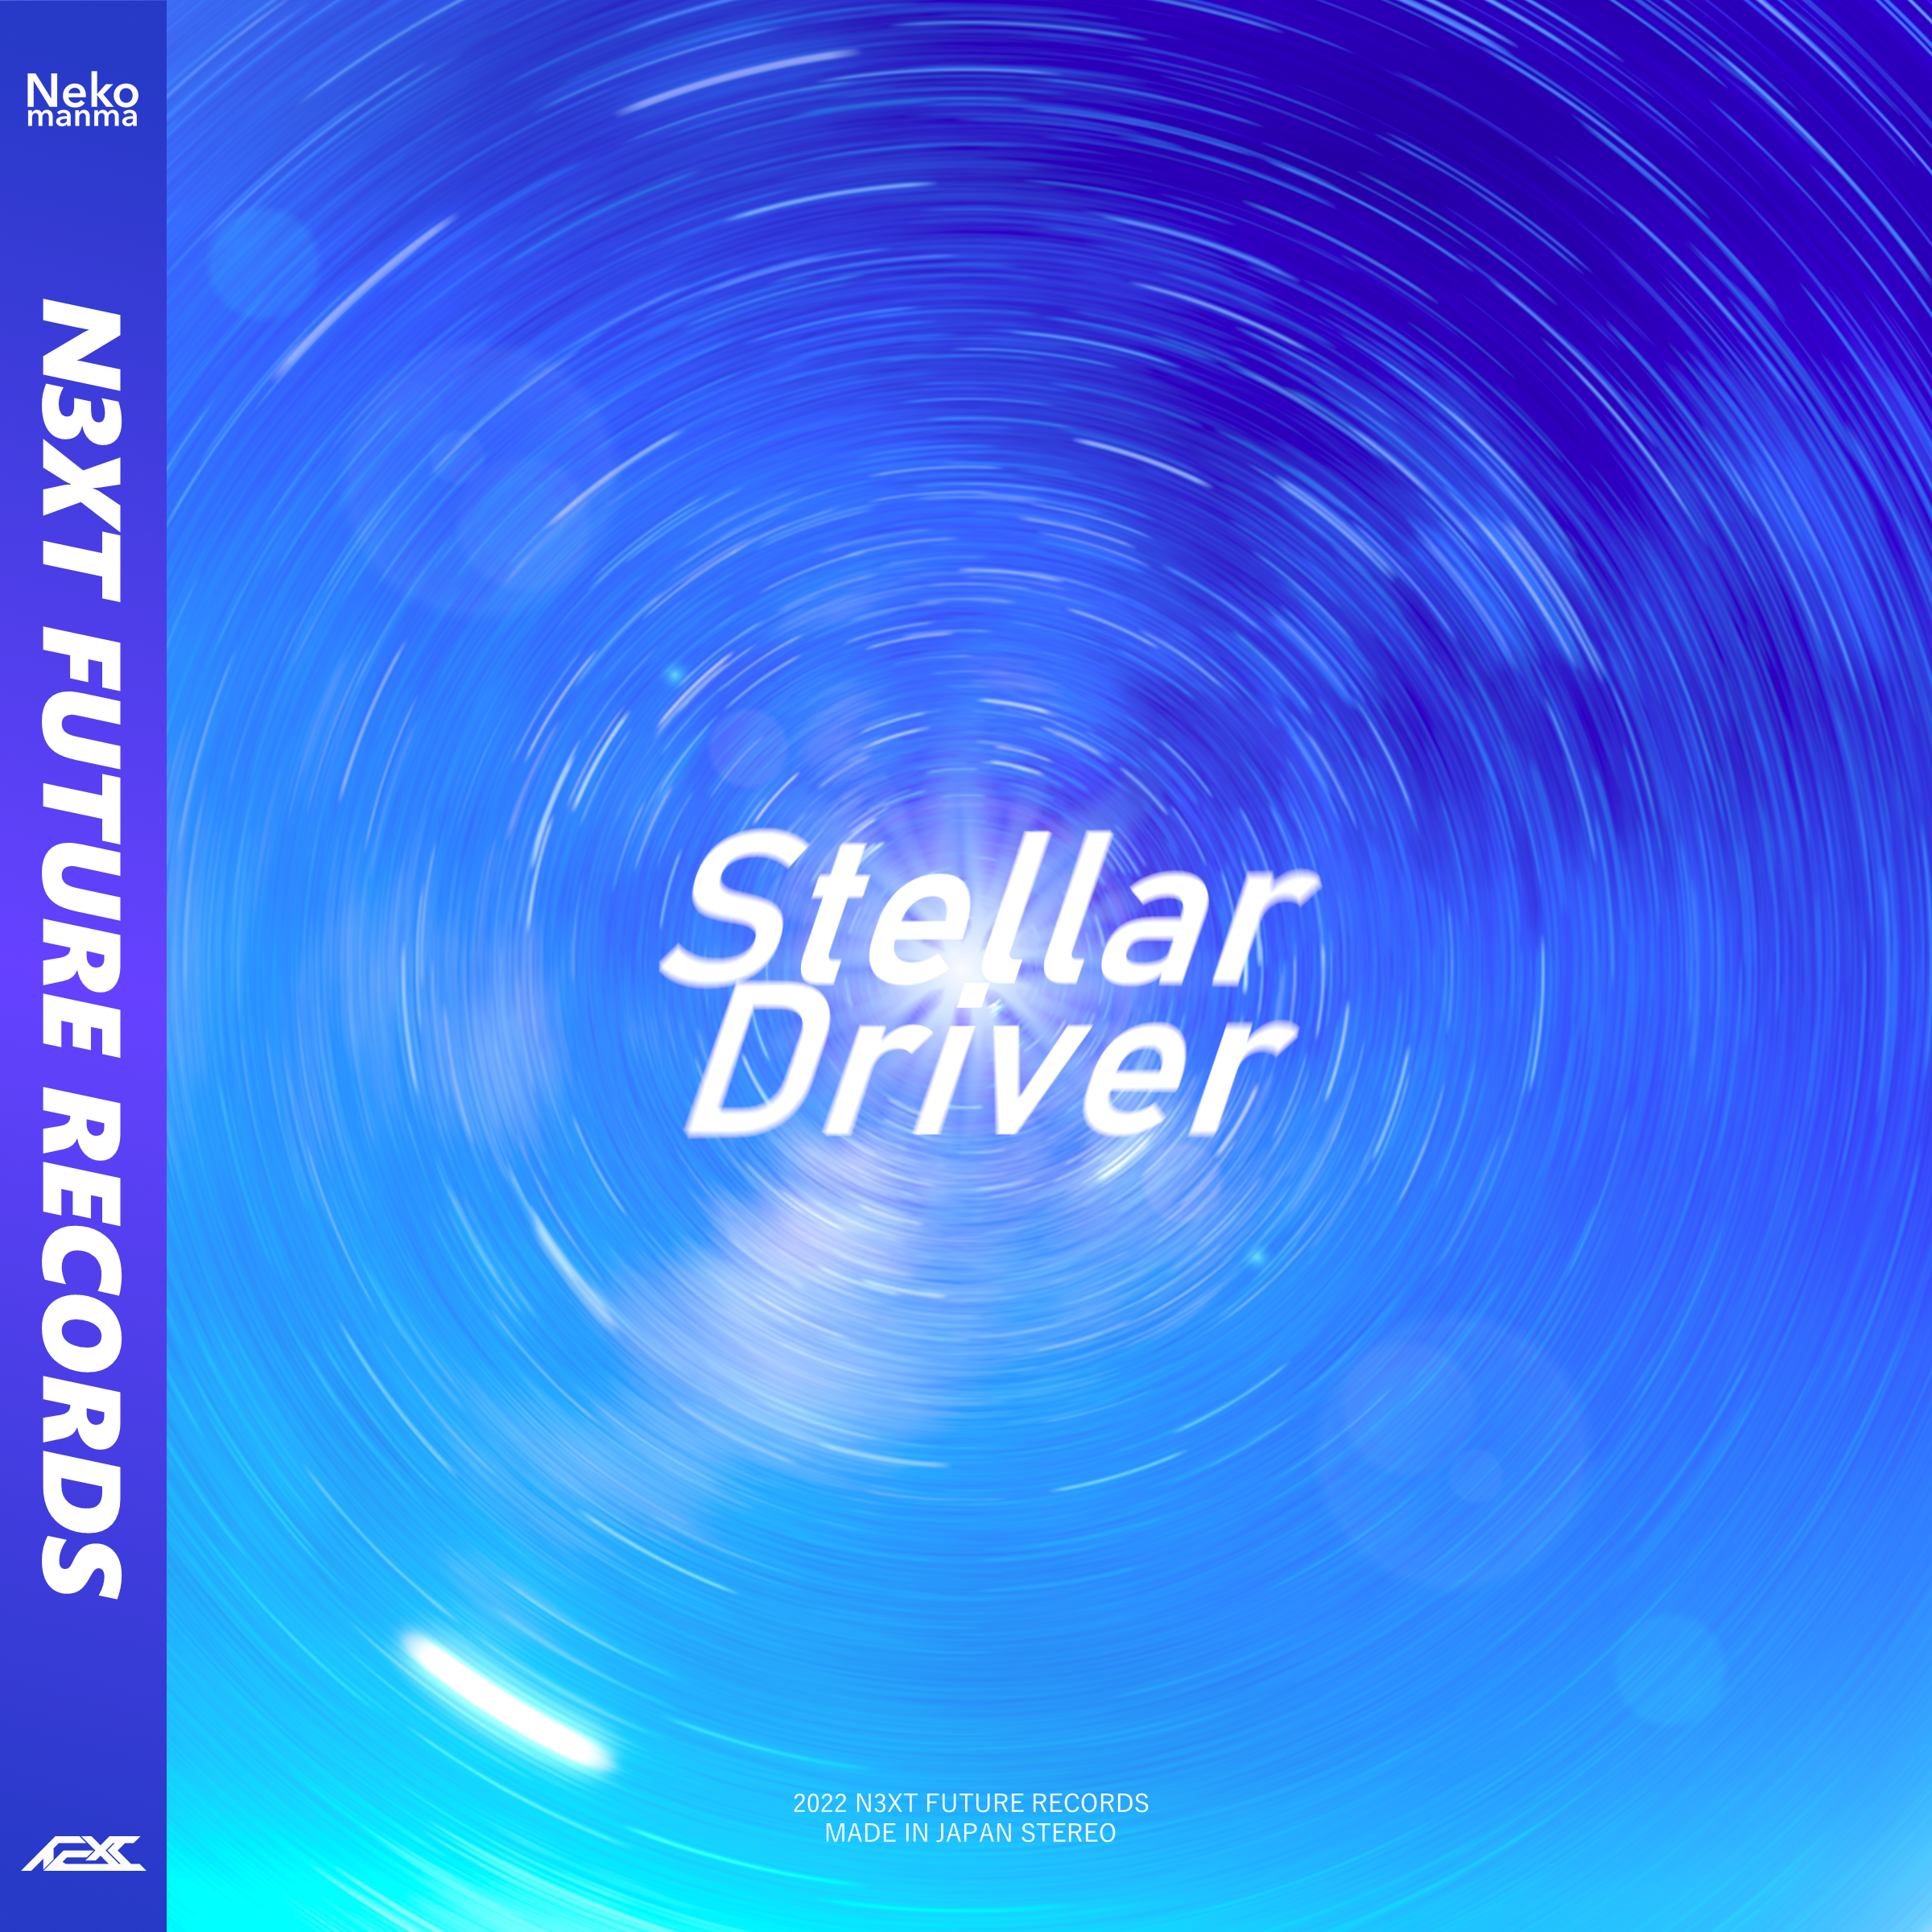 Nekomanma - Stellar Driver